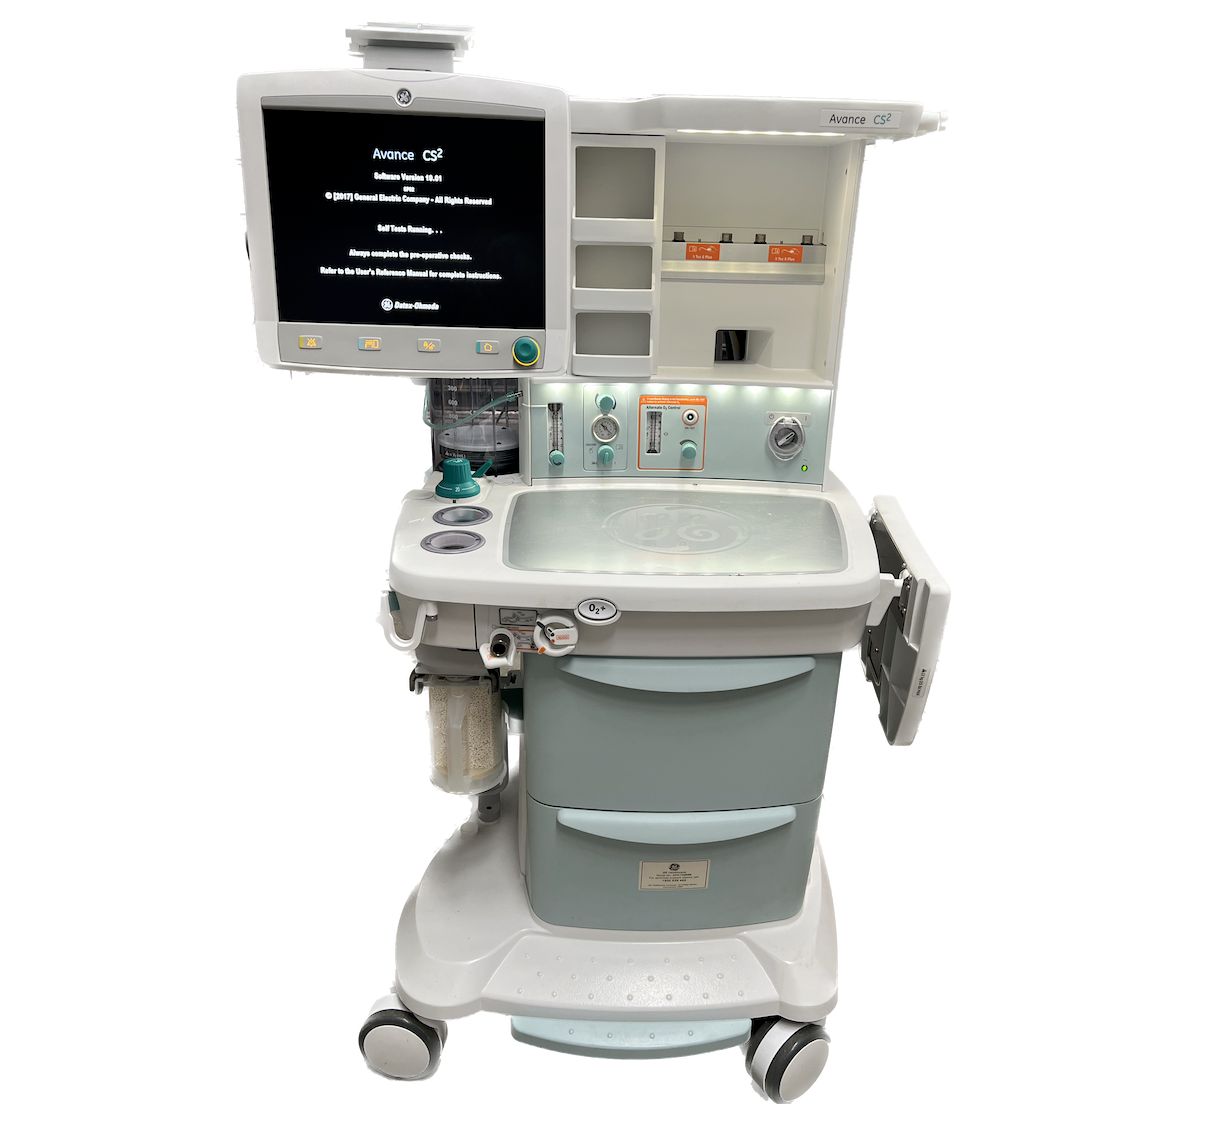 GE Avance CS2 Anaesthetic Workstation